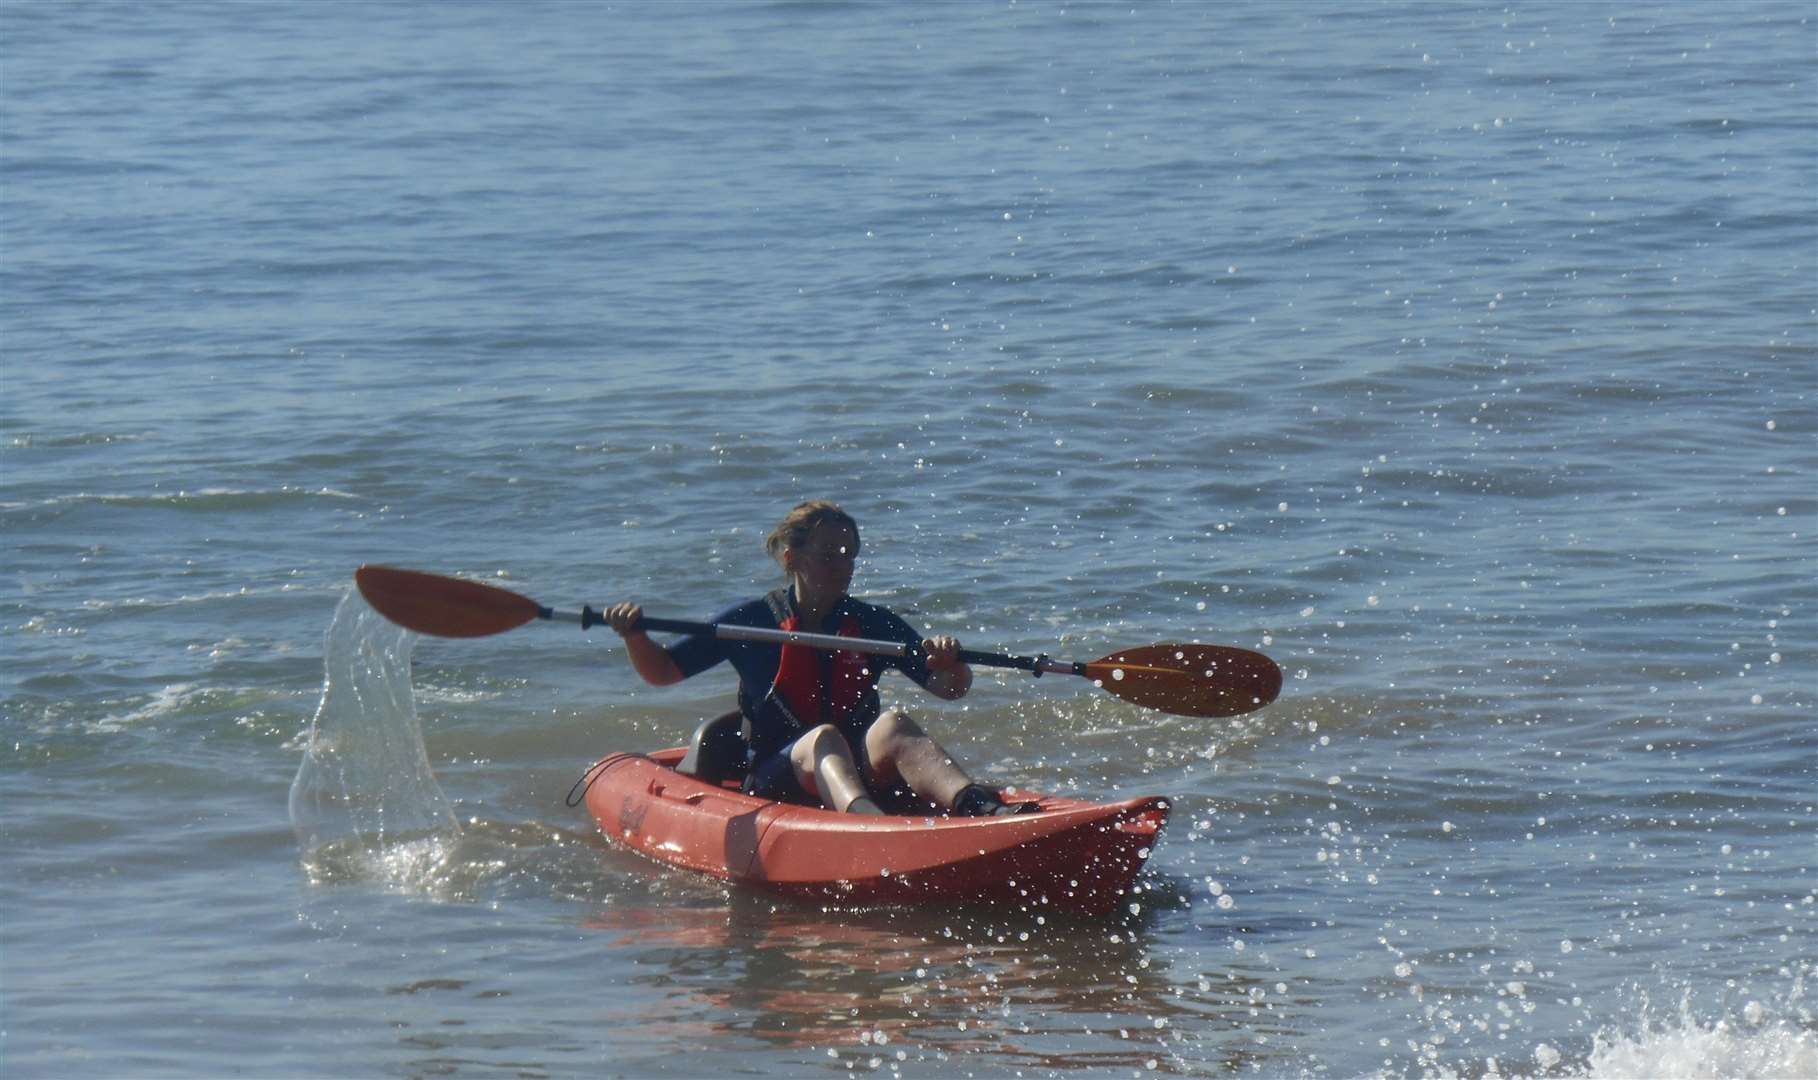 Mrs Elphicke kayaking at St Margaret's Bay. Picture: Natalie Elphicke